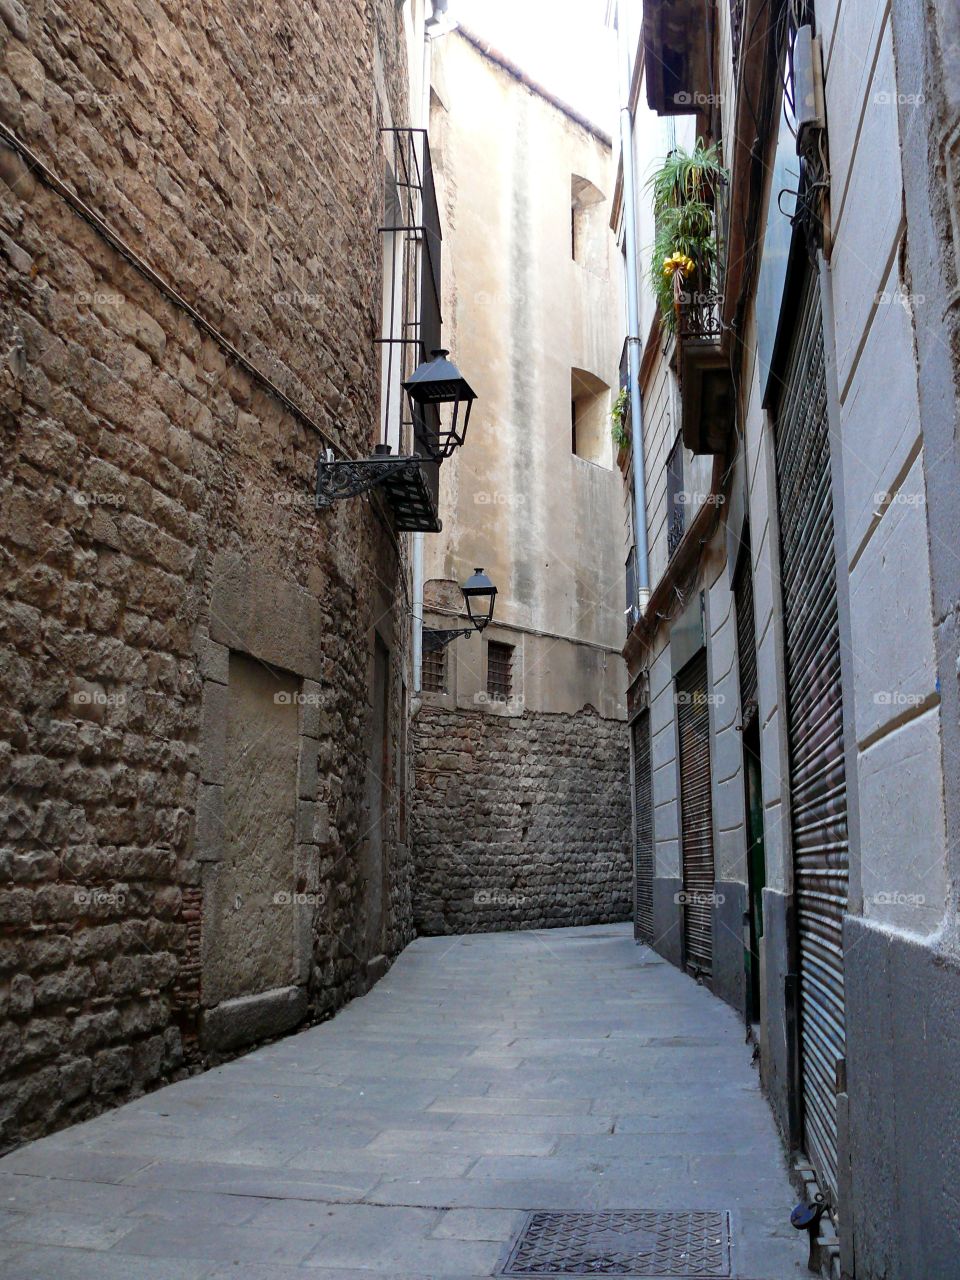 Exploring mysterious alleys in Barcelona